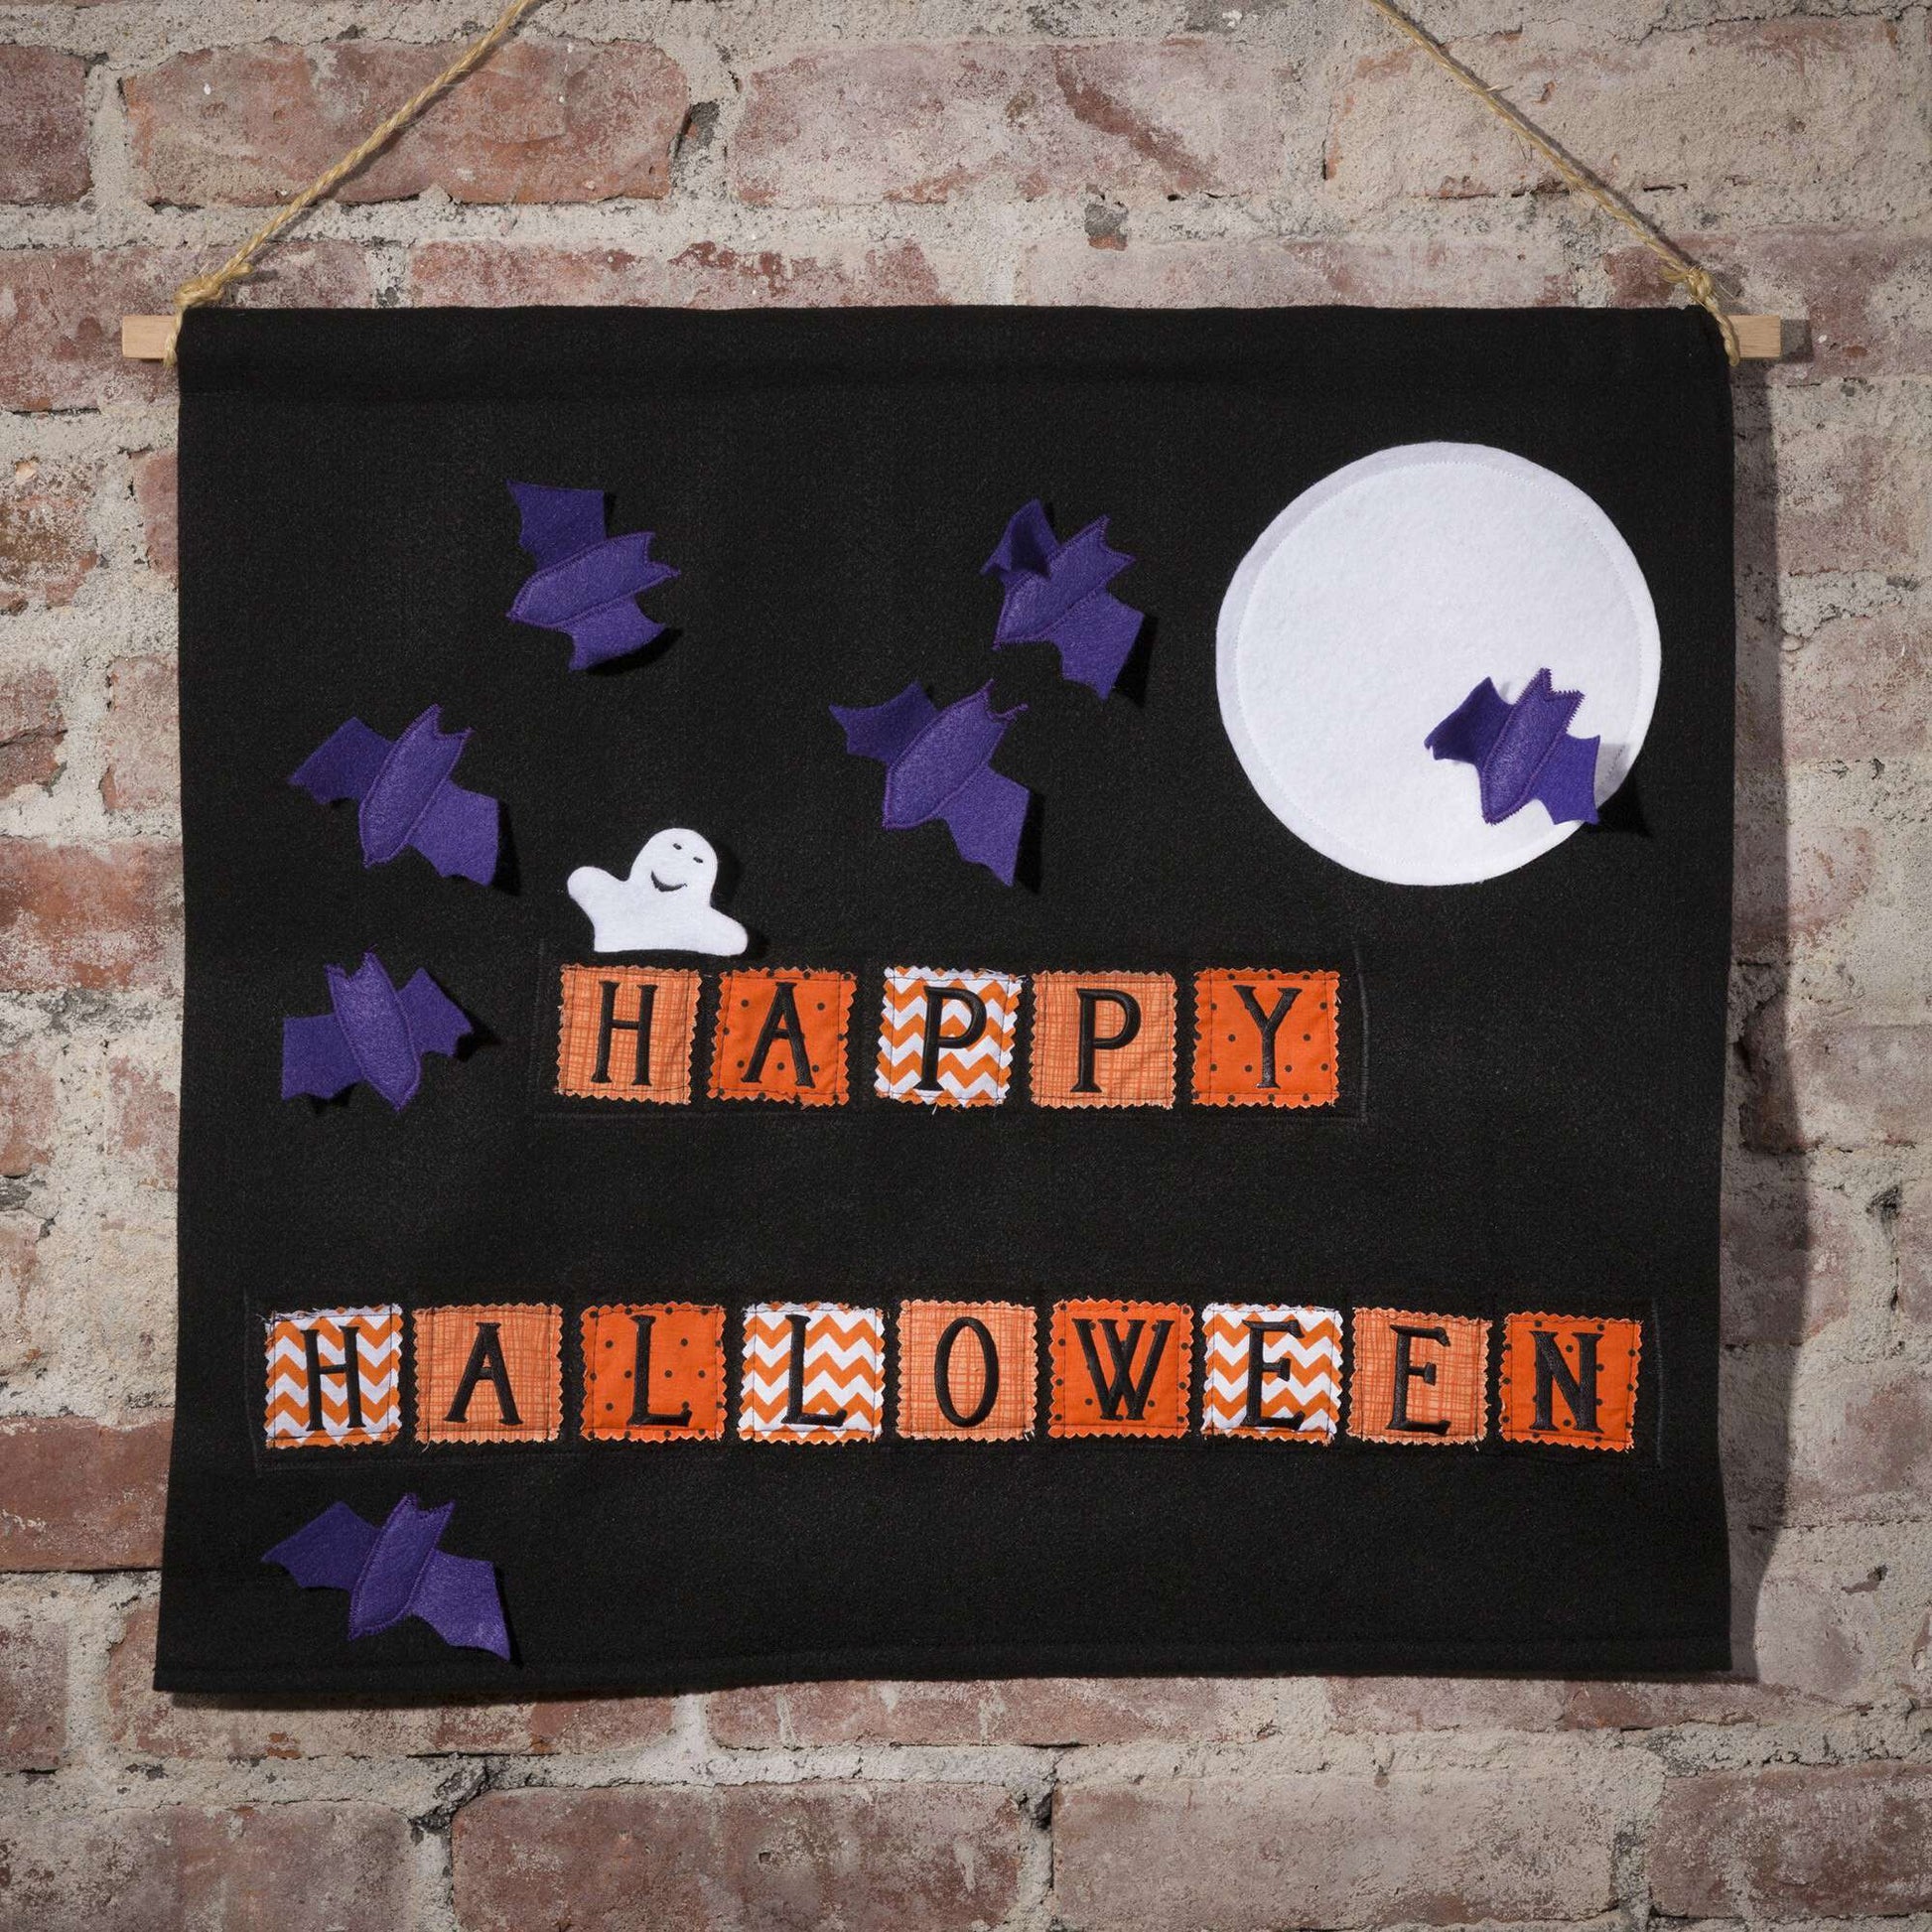 Free Coats & Clark Halloween Countdown Calendar Sewing Pattern